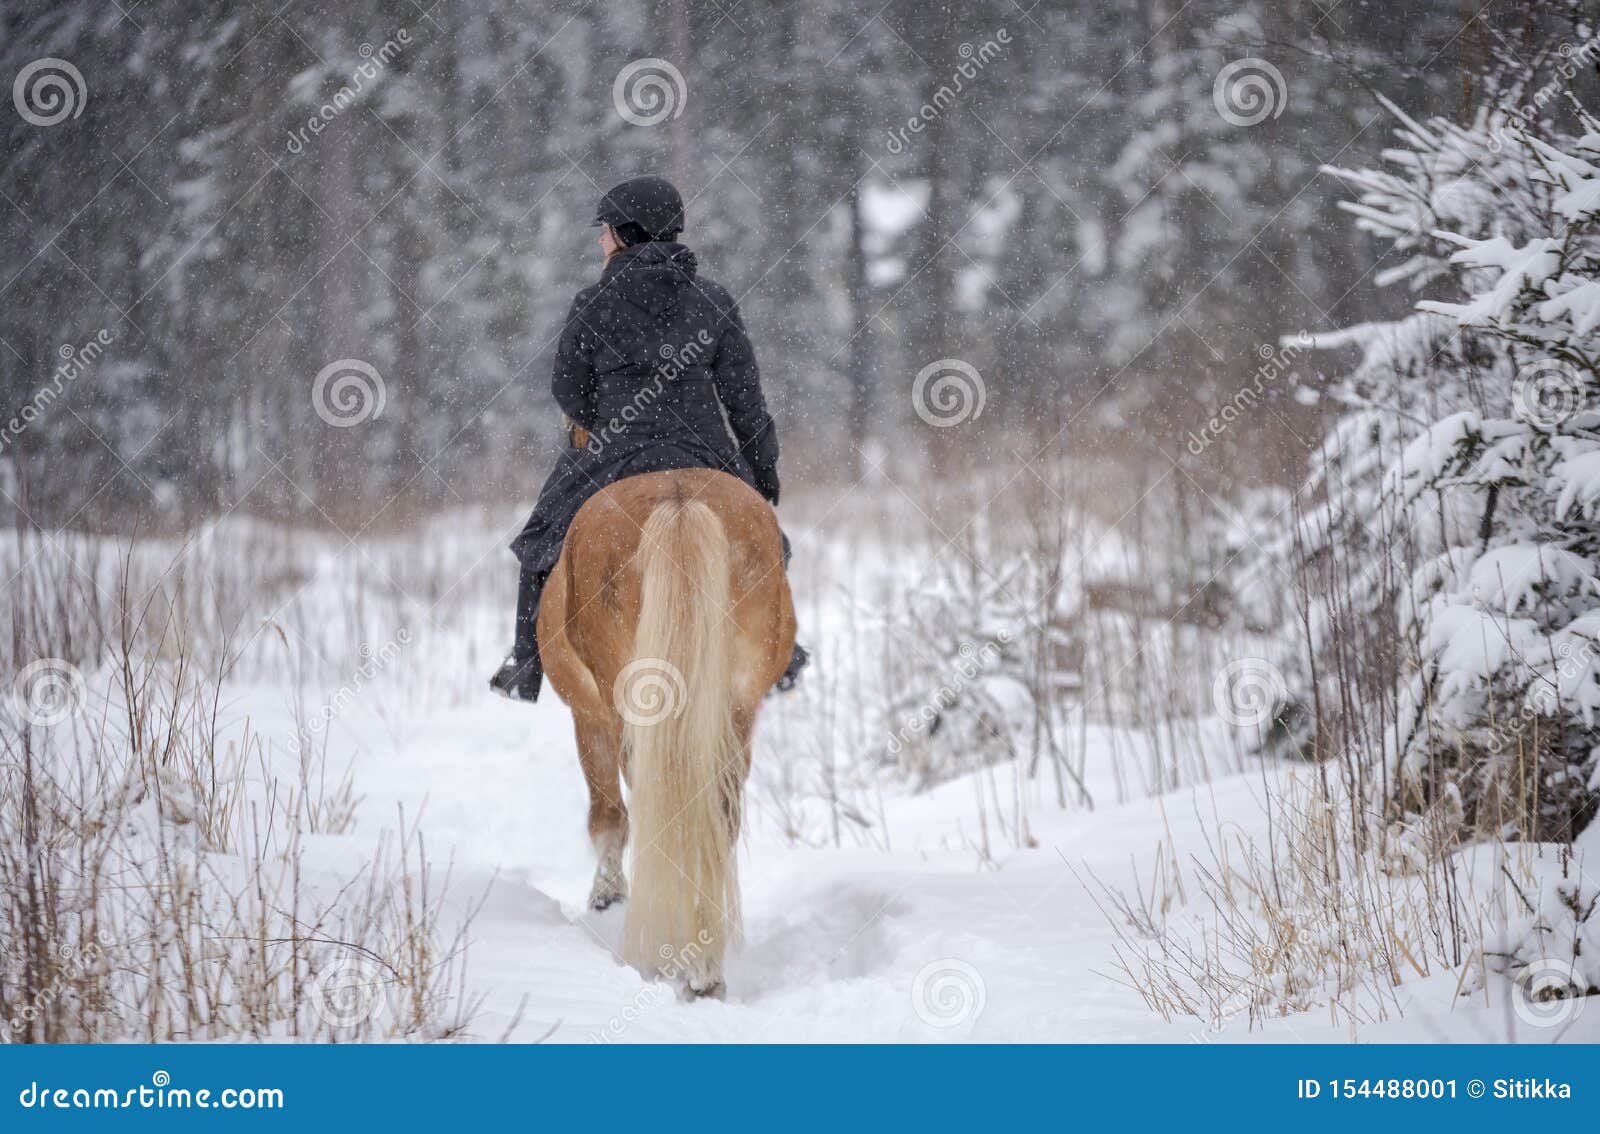 woman horseback riding in winter snowfall